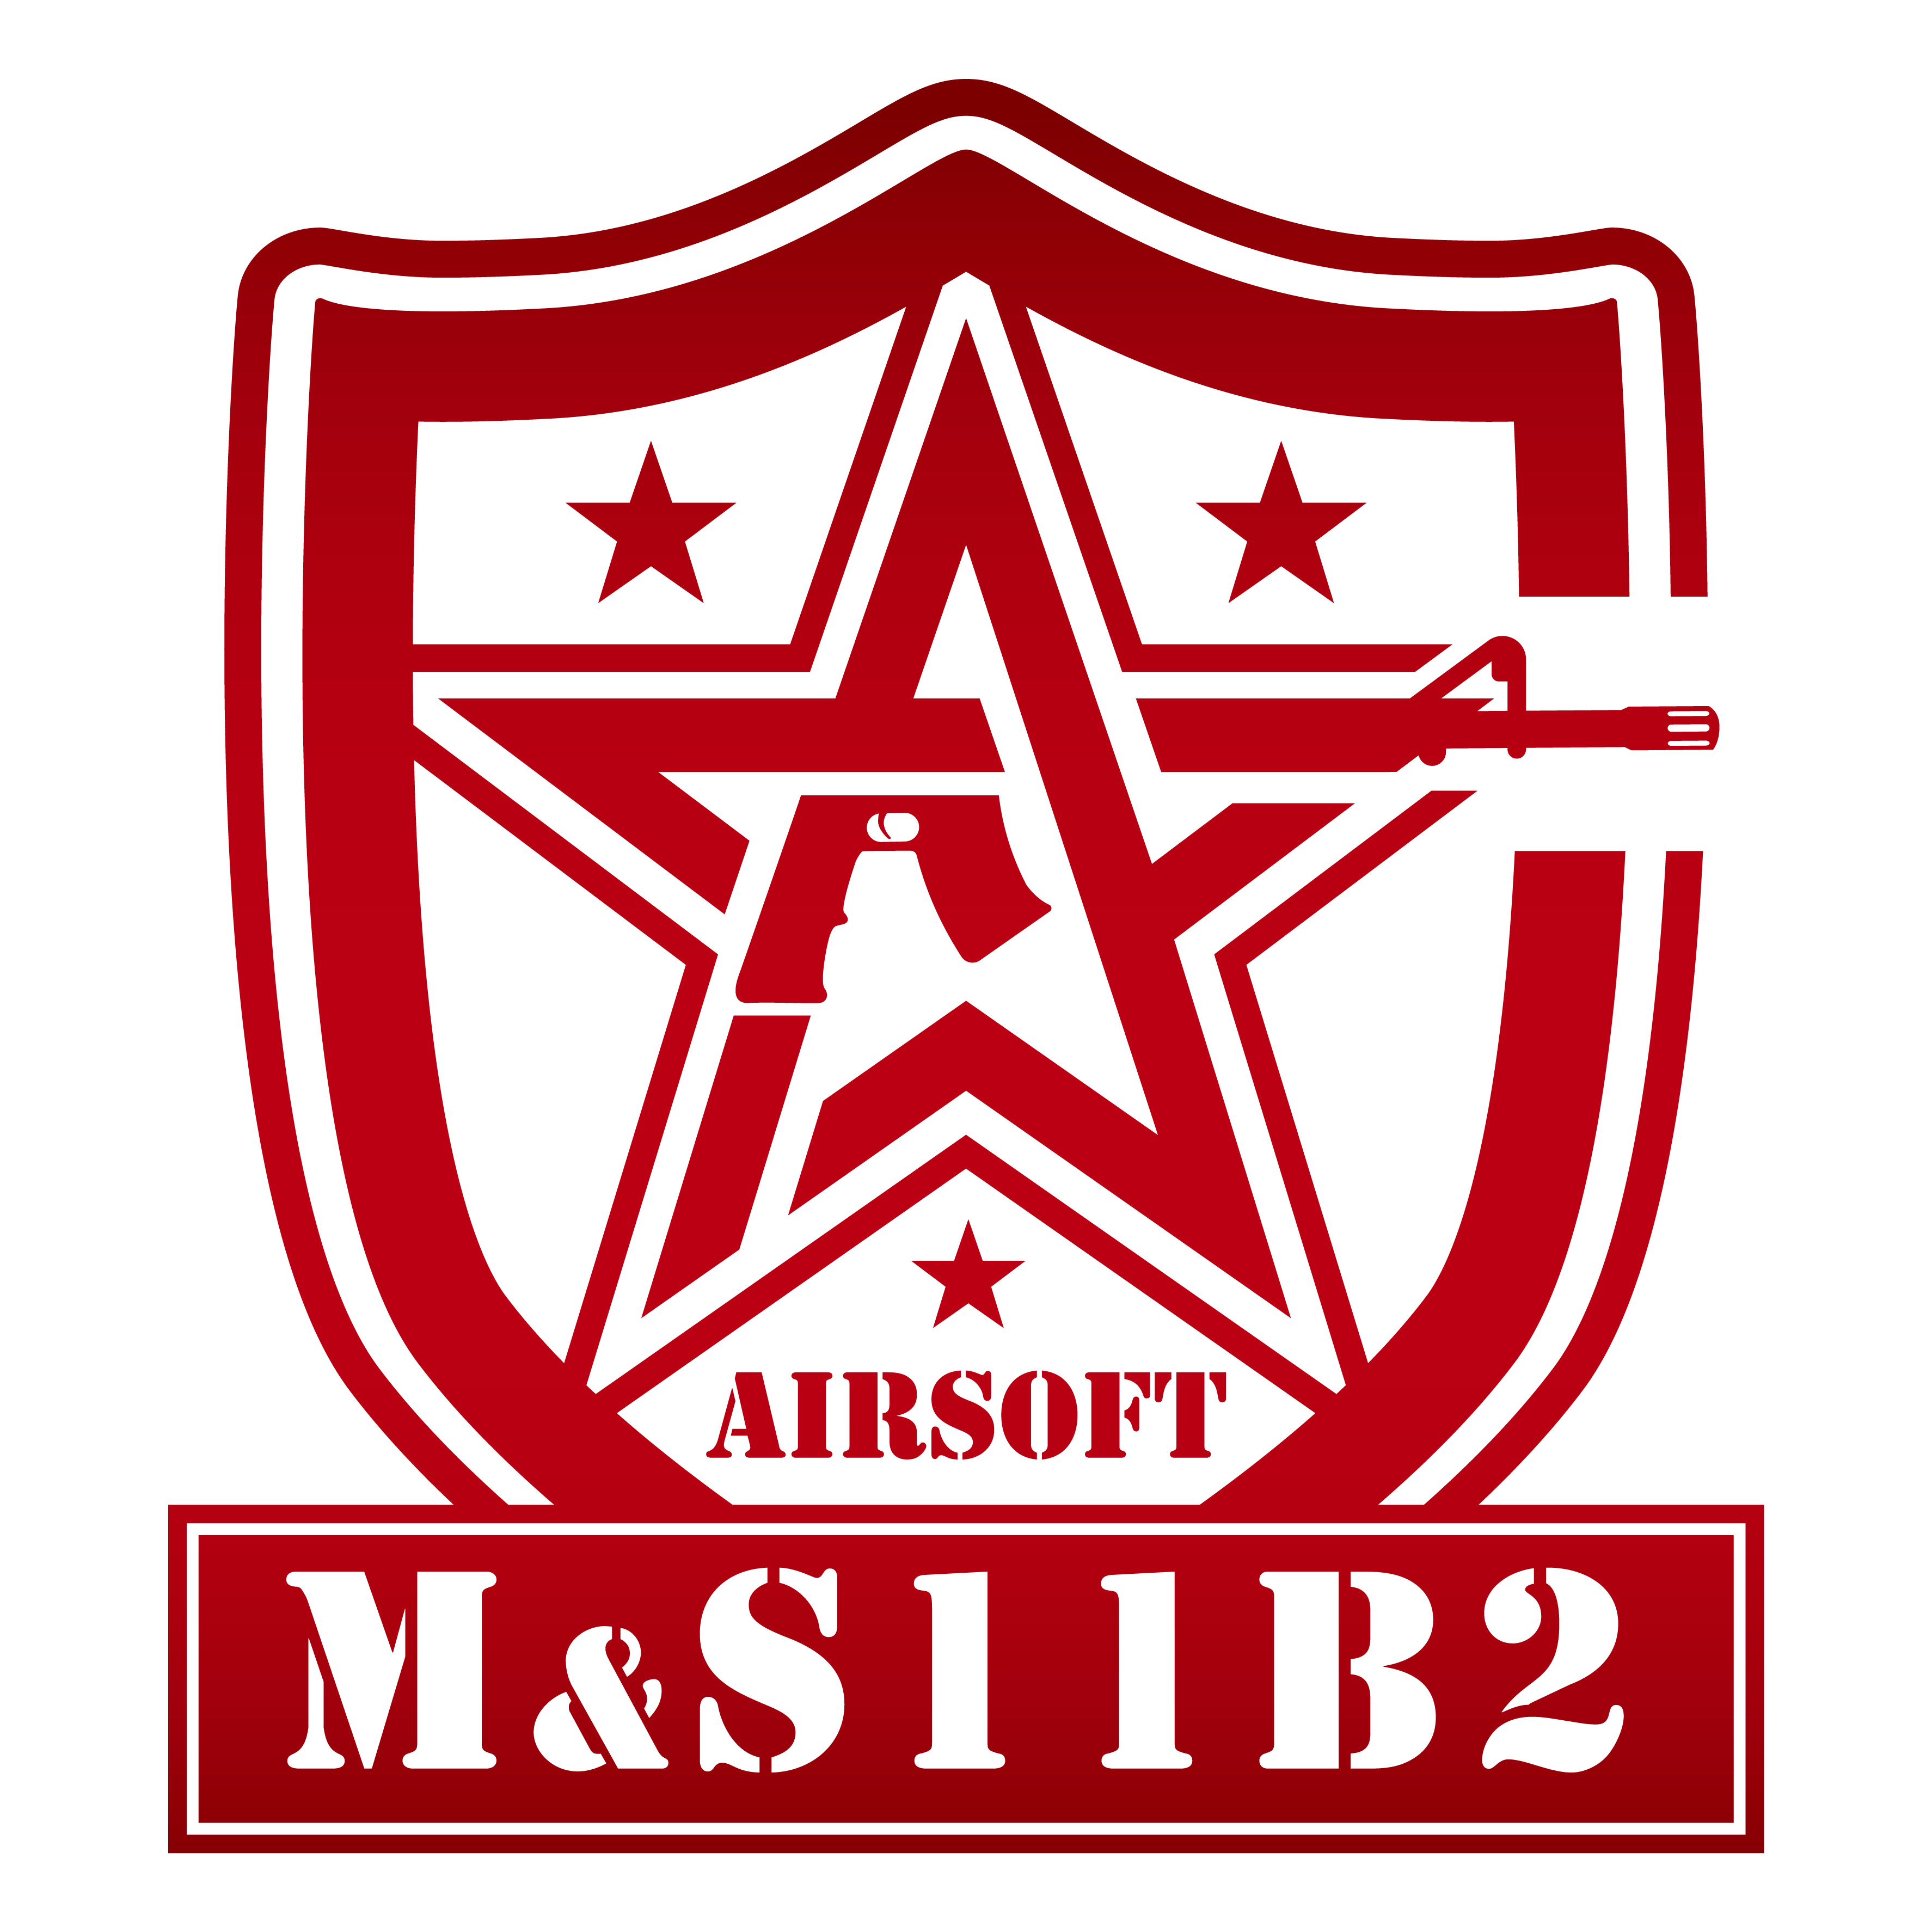 M&S11B2 AIRSOFT株式会社